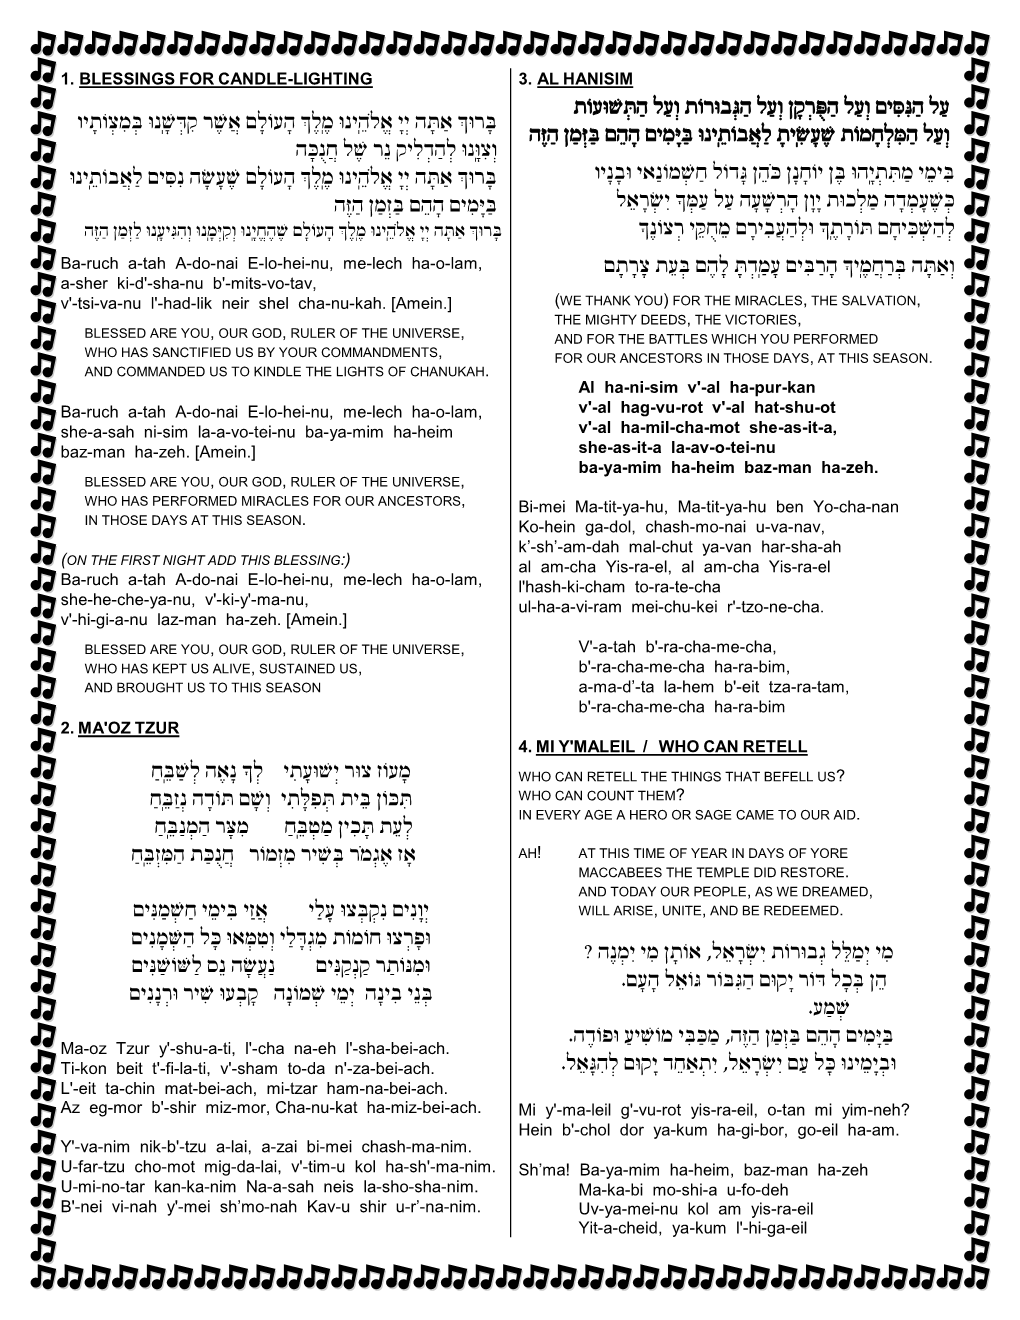 The Chanukah Song Sheet!